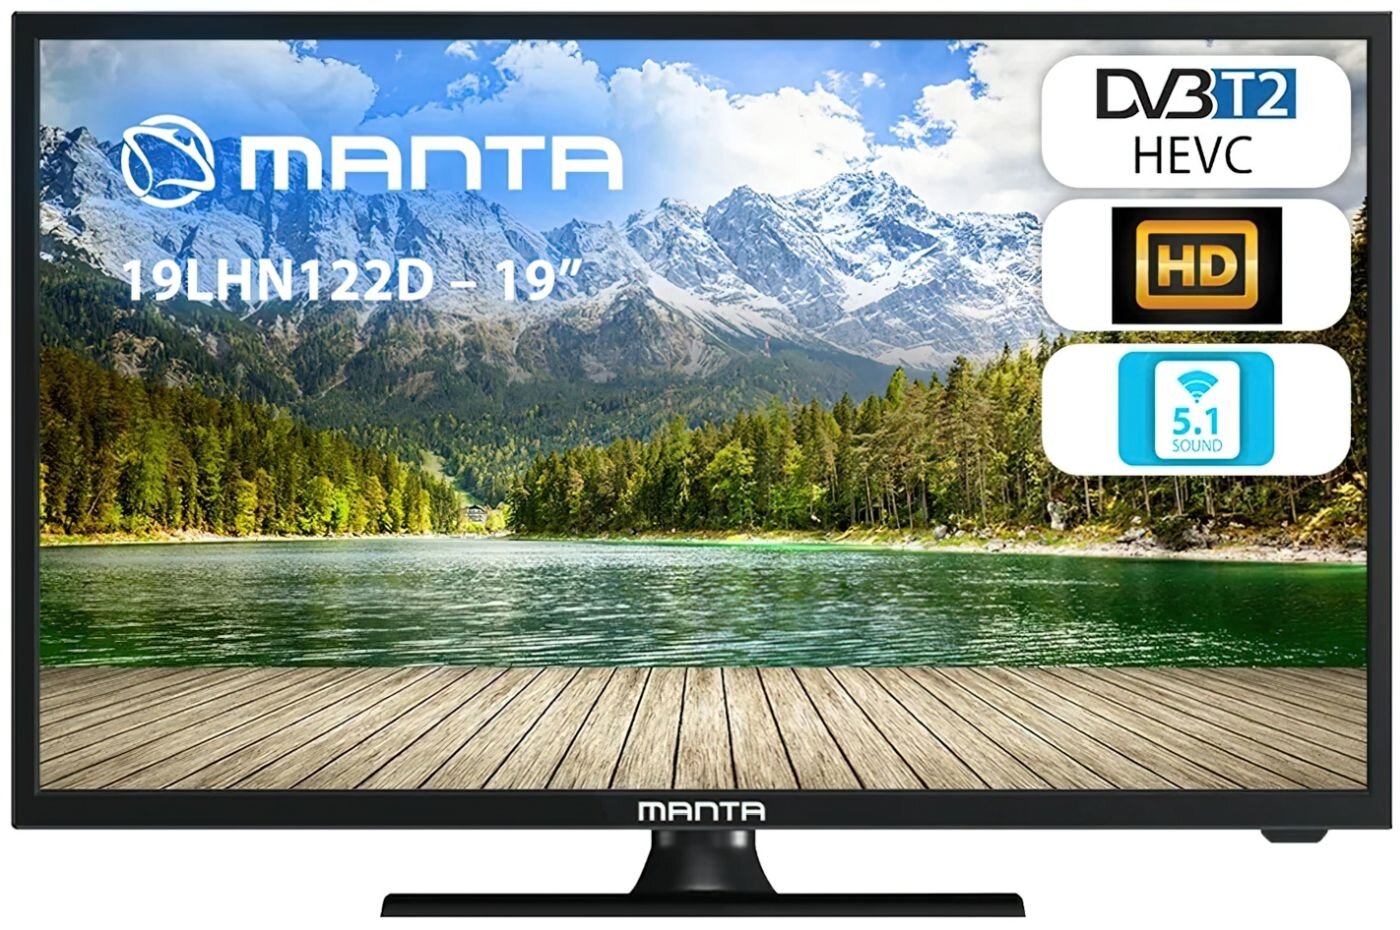 MANTA 19LHN122D 19" LED DVB-T2/HEVC/H.265 Telewizor - niskie ceny i opinie  w Media Expert